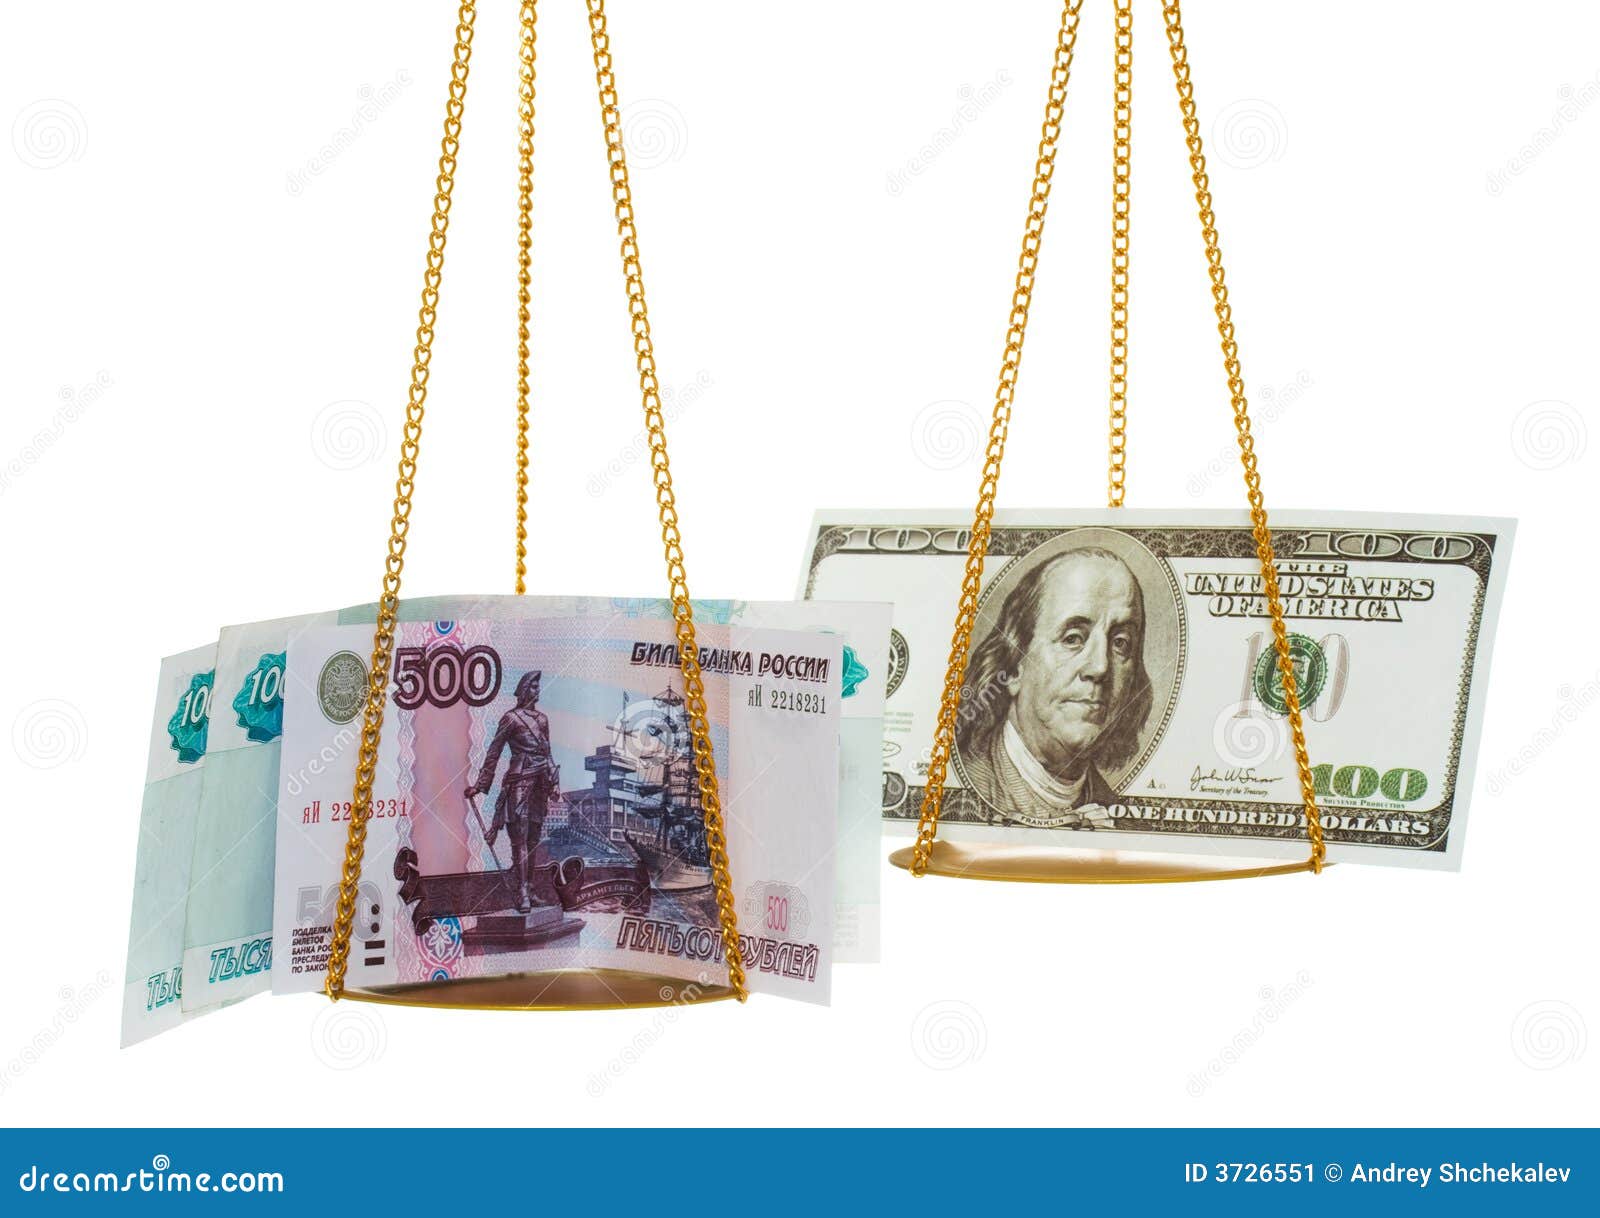 exchange rubles on dollars